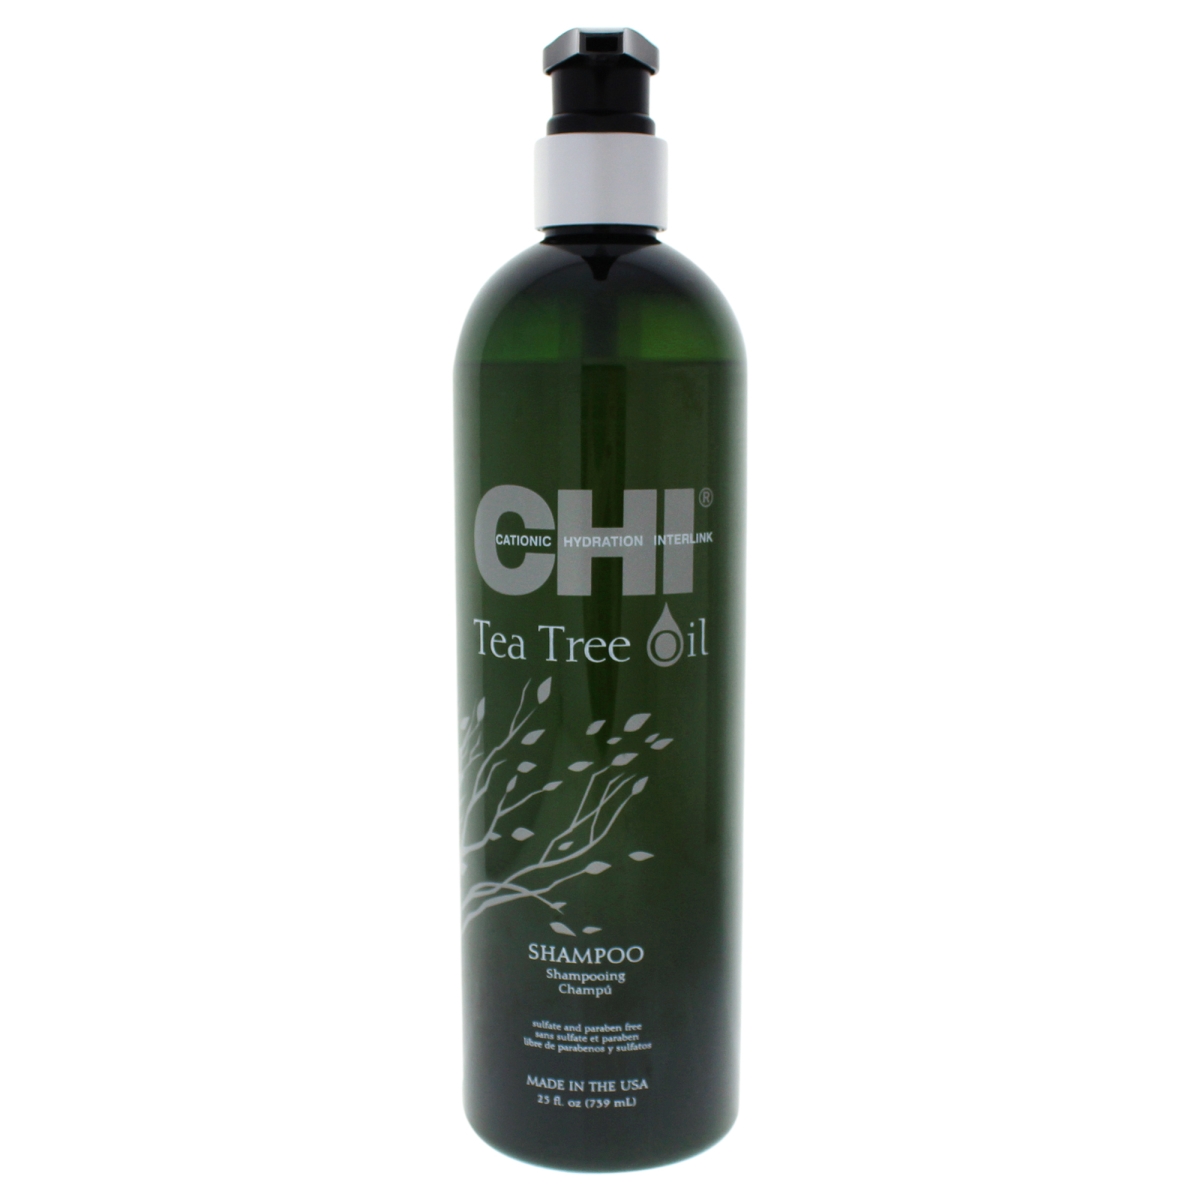 U-hc-11874 25 Oz Tea Tree Oil Shampoo For Unisex